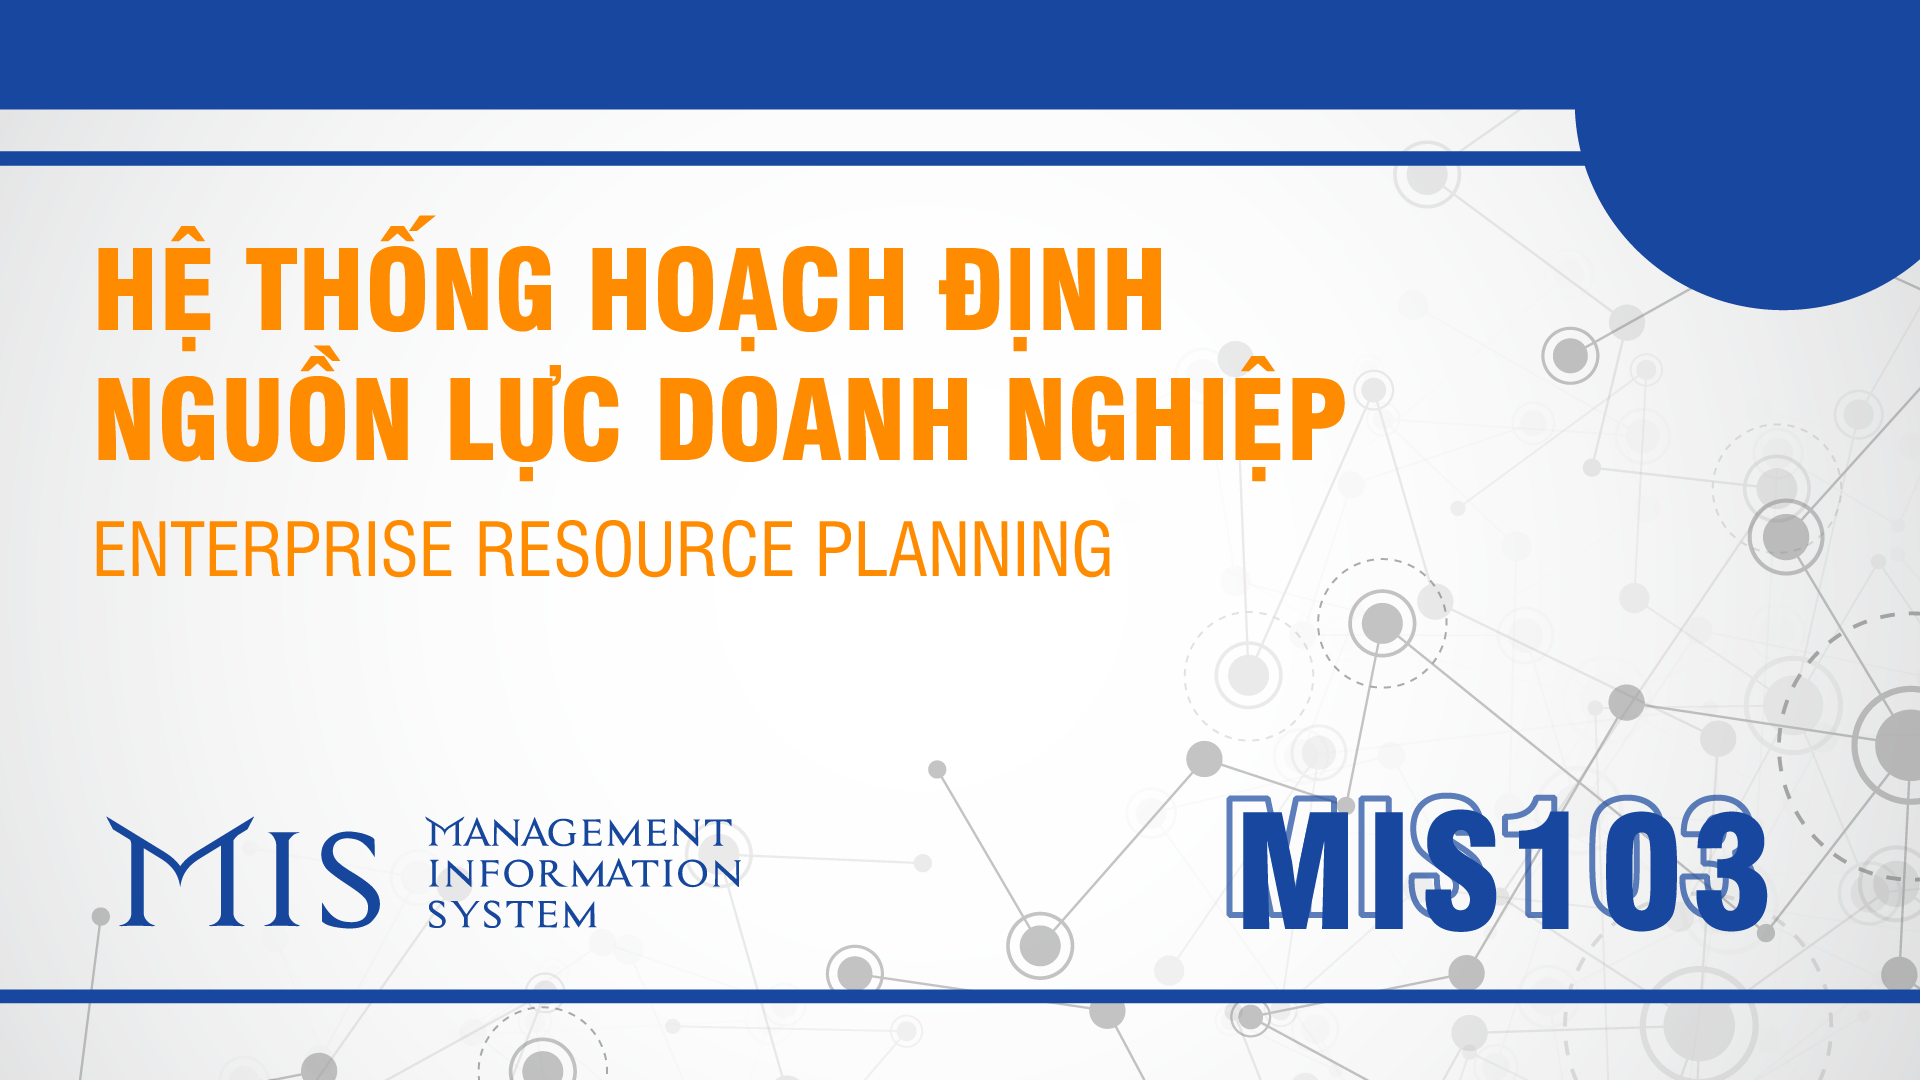 Enterprise Resource Planning MIS103